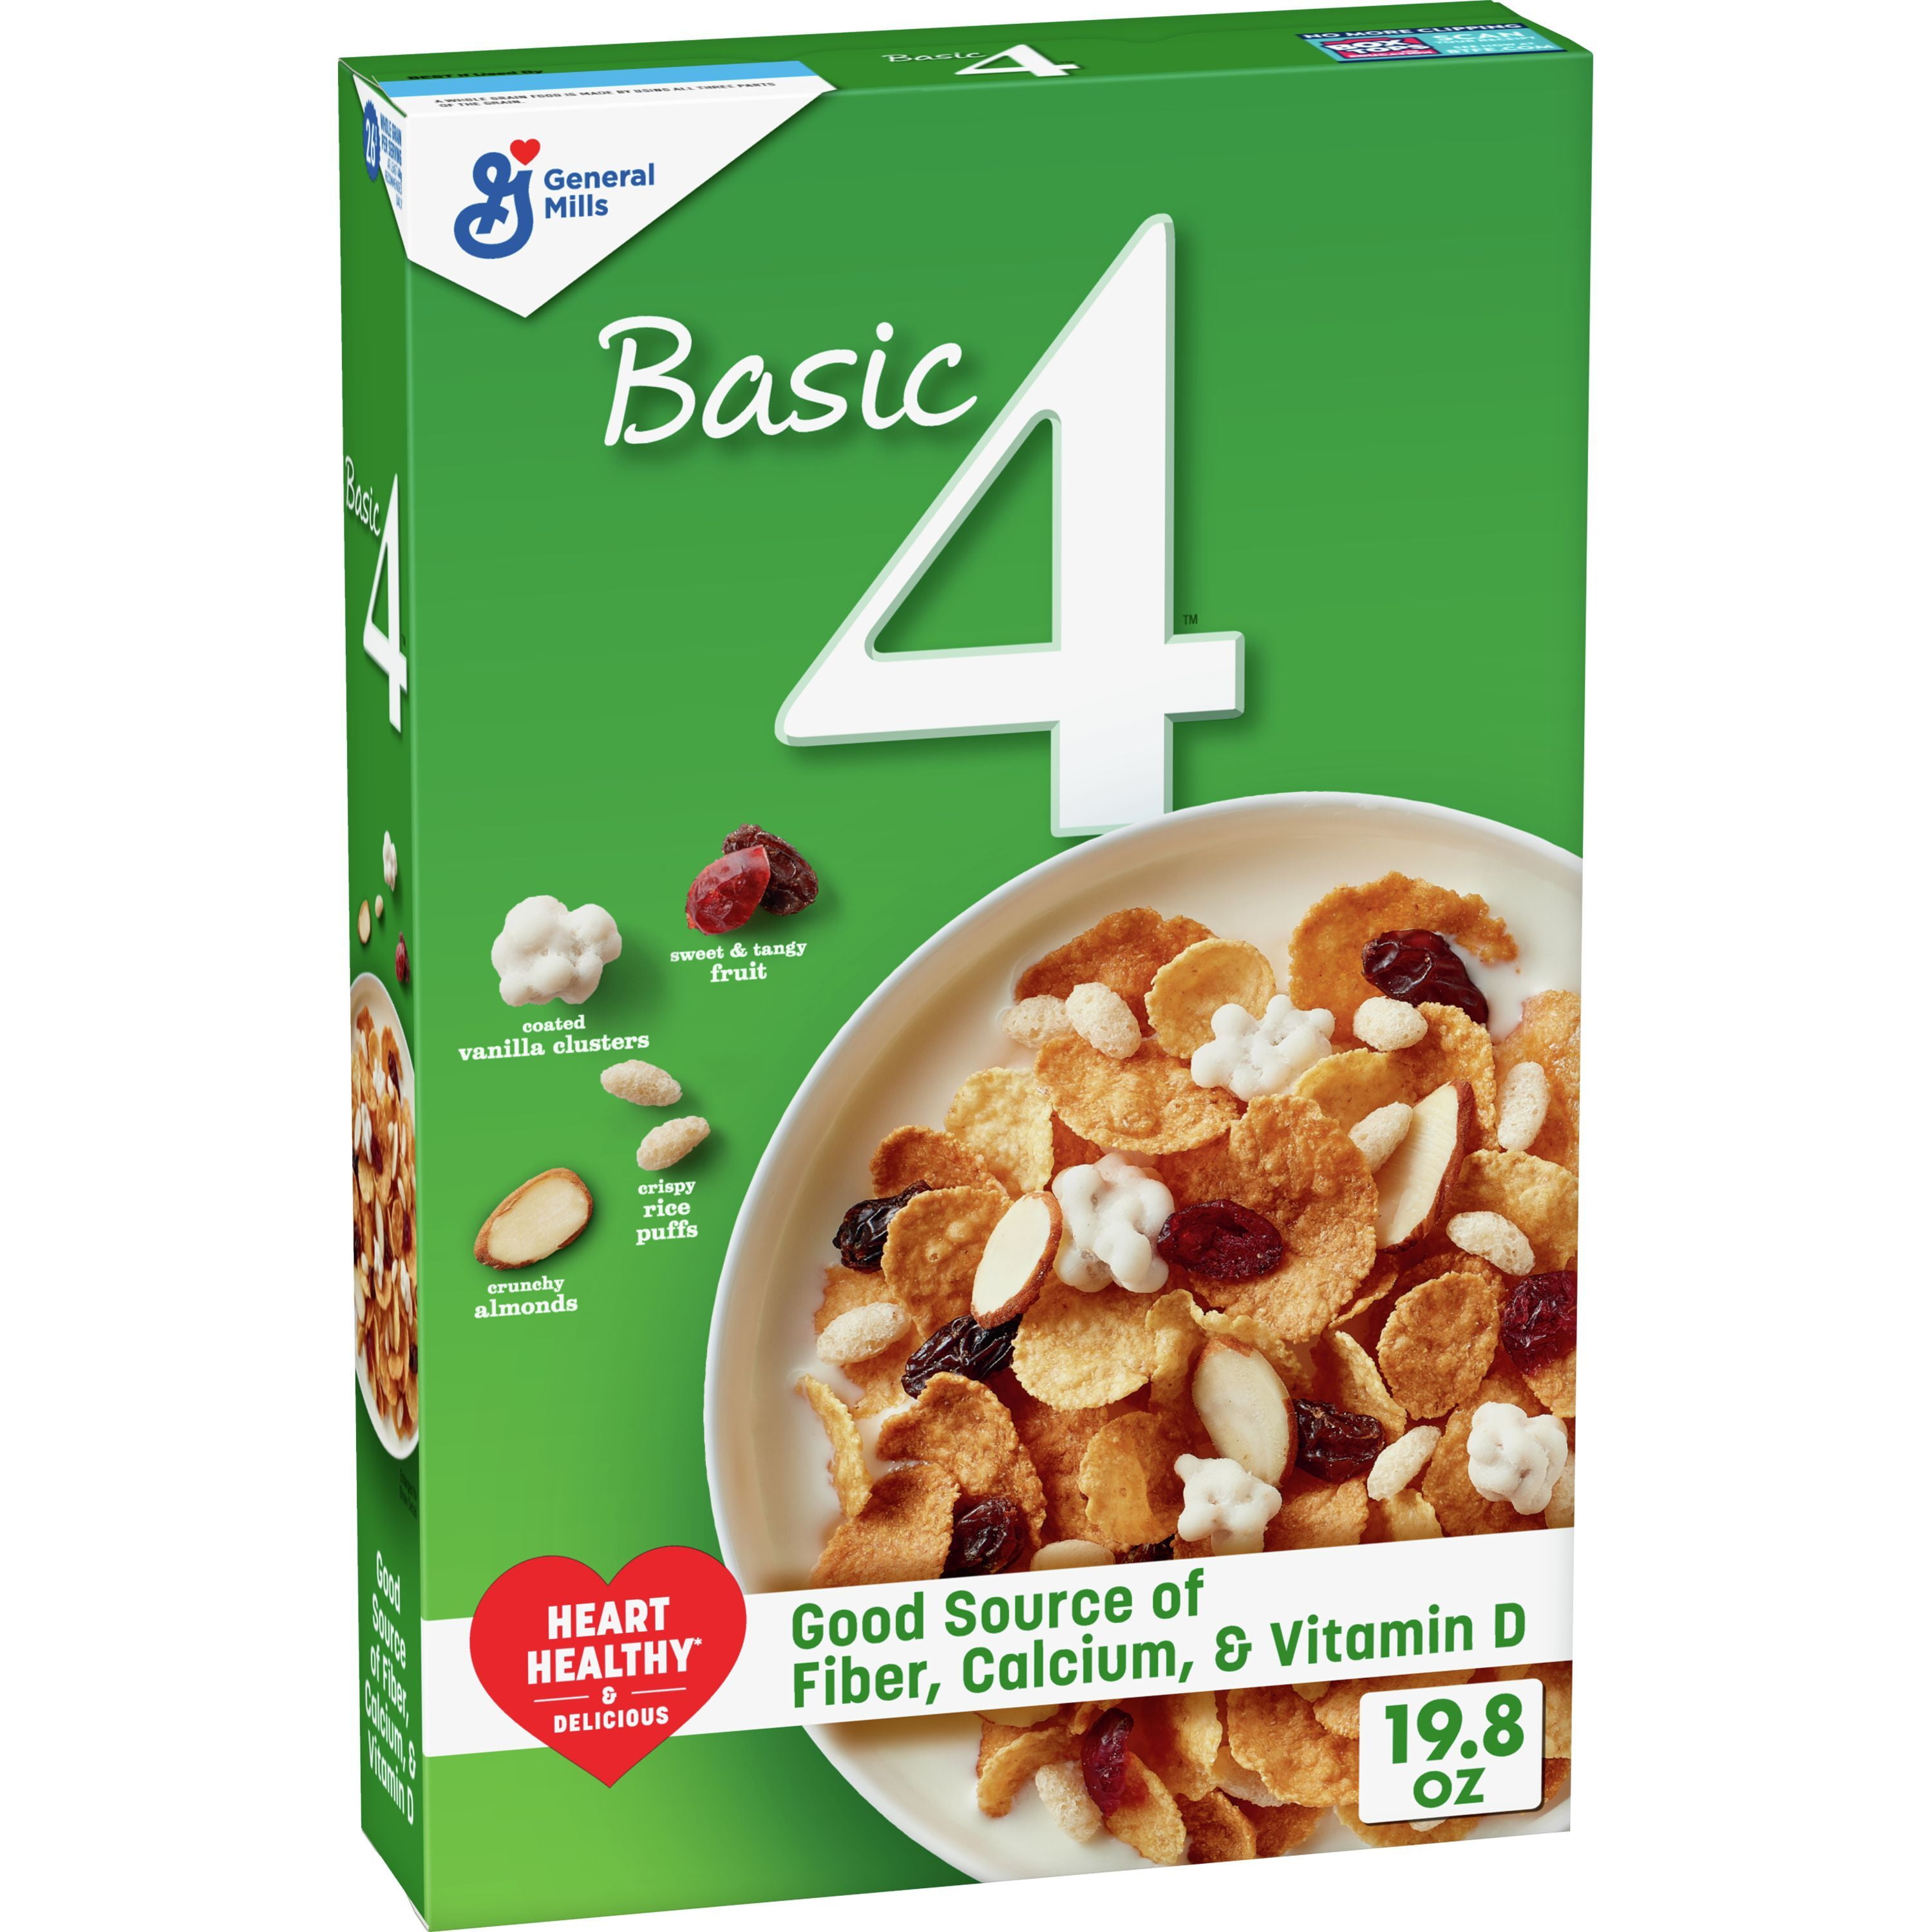 Basic 4 Breakfast Cereal, Multigrain, Dried Fruit, Almonds, Good Source of Fiber, Family Size, 19.8 oz